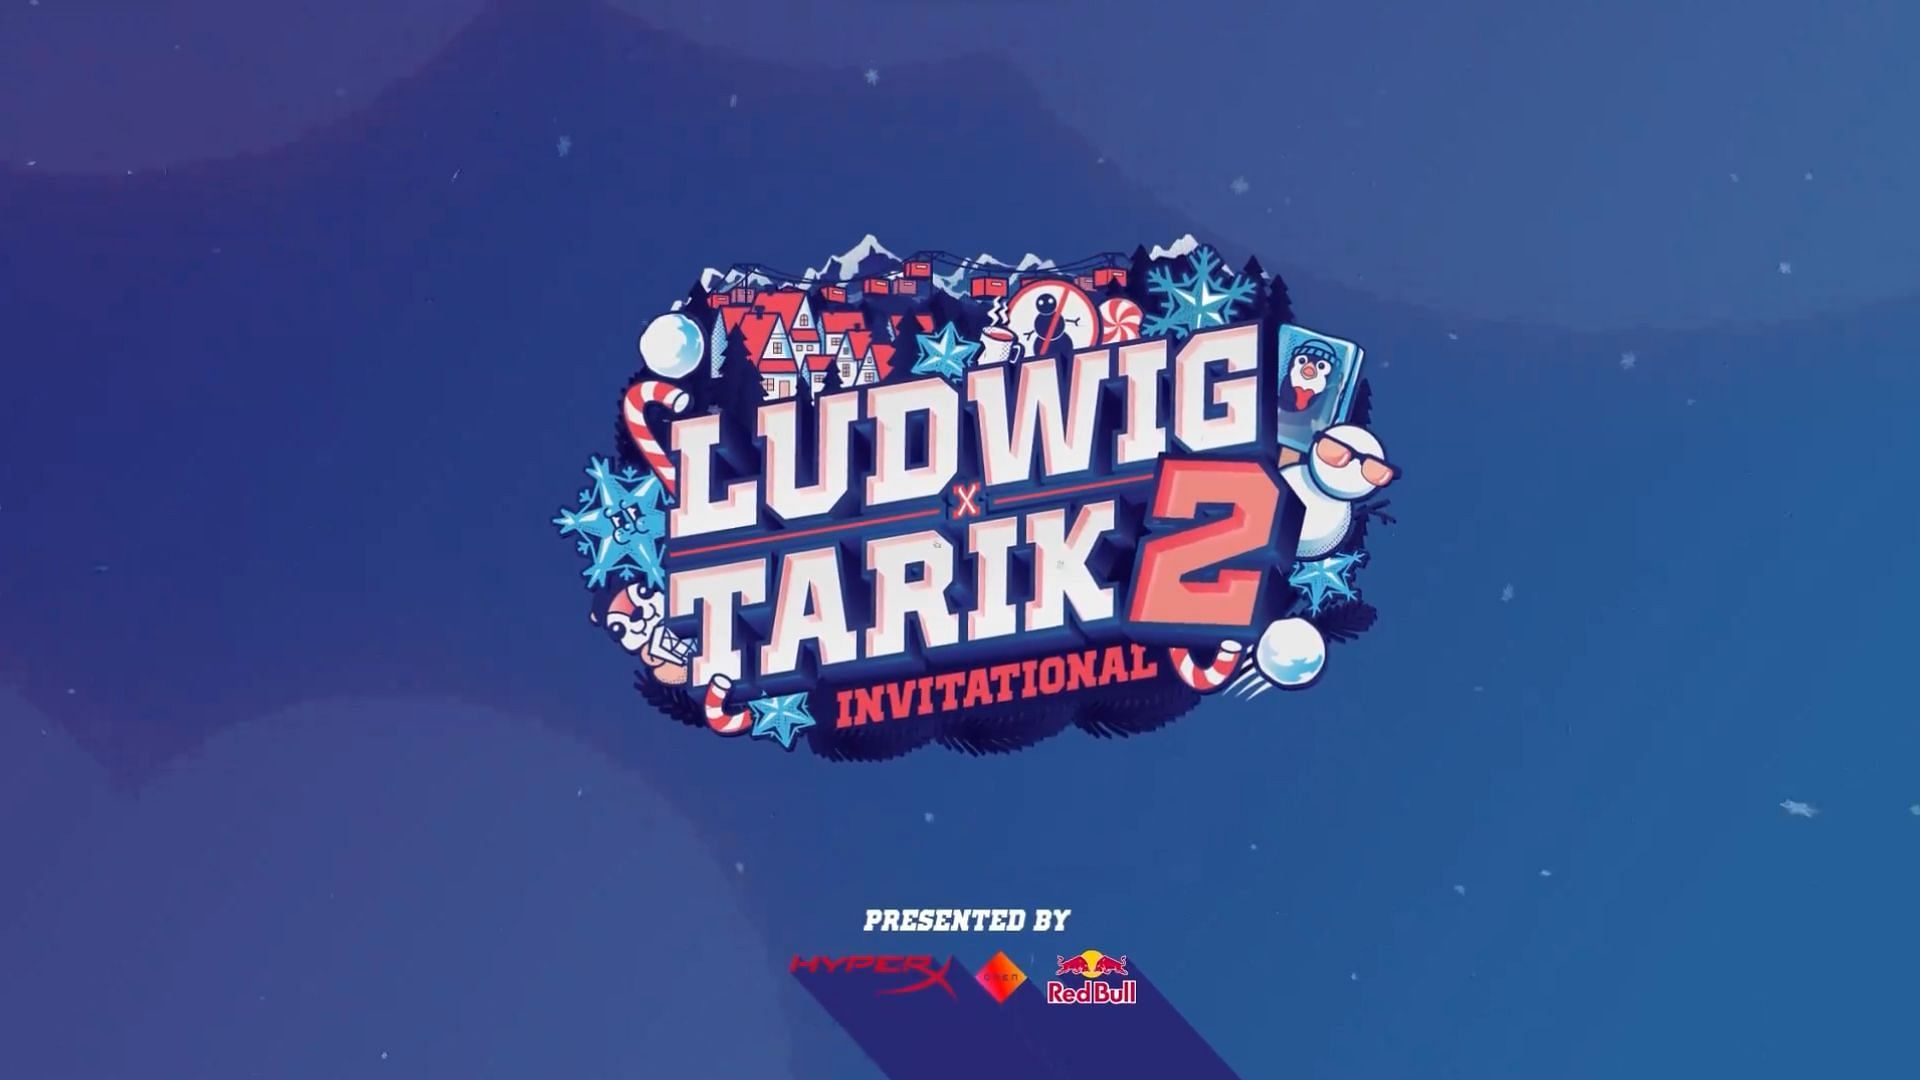 The Ludwig x Tarik Invitational 2 has been announced (Image via Ludwig/X)